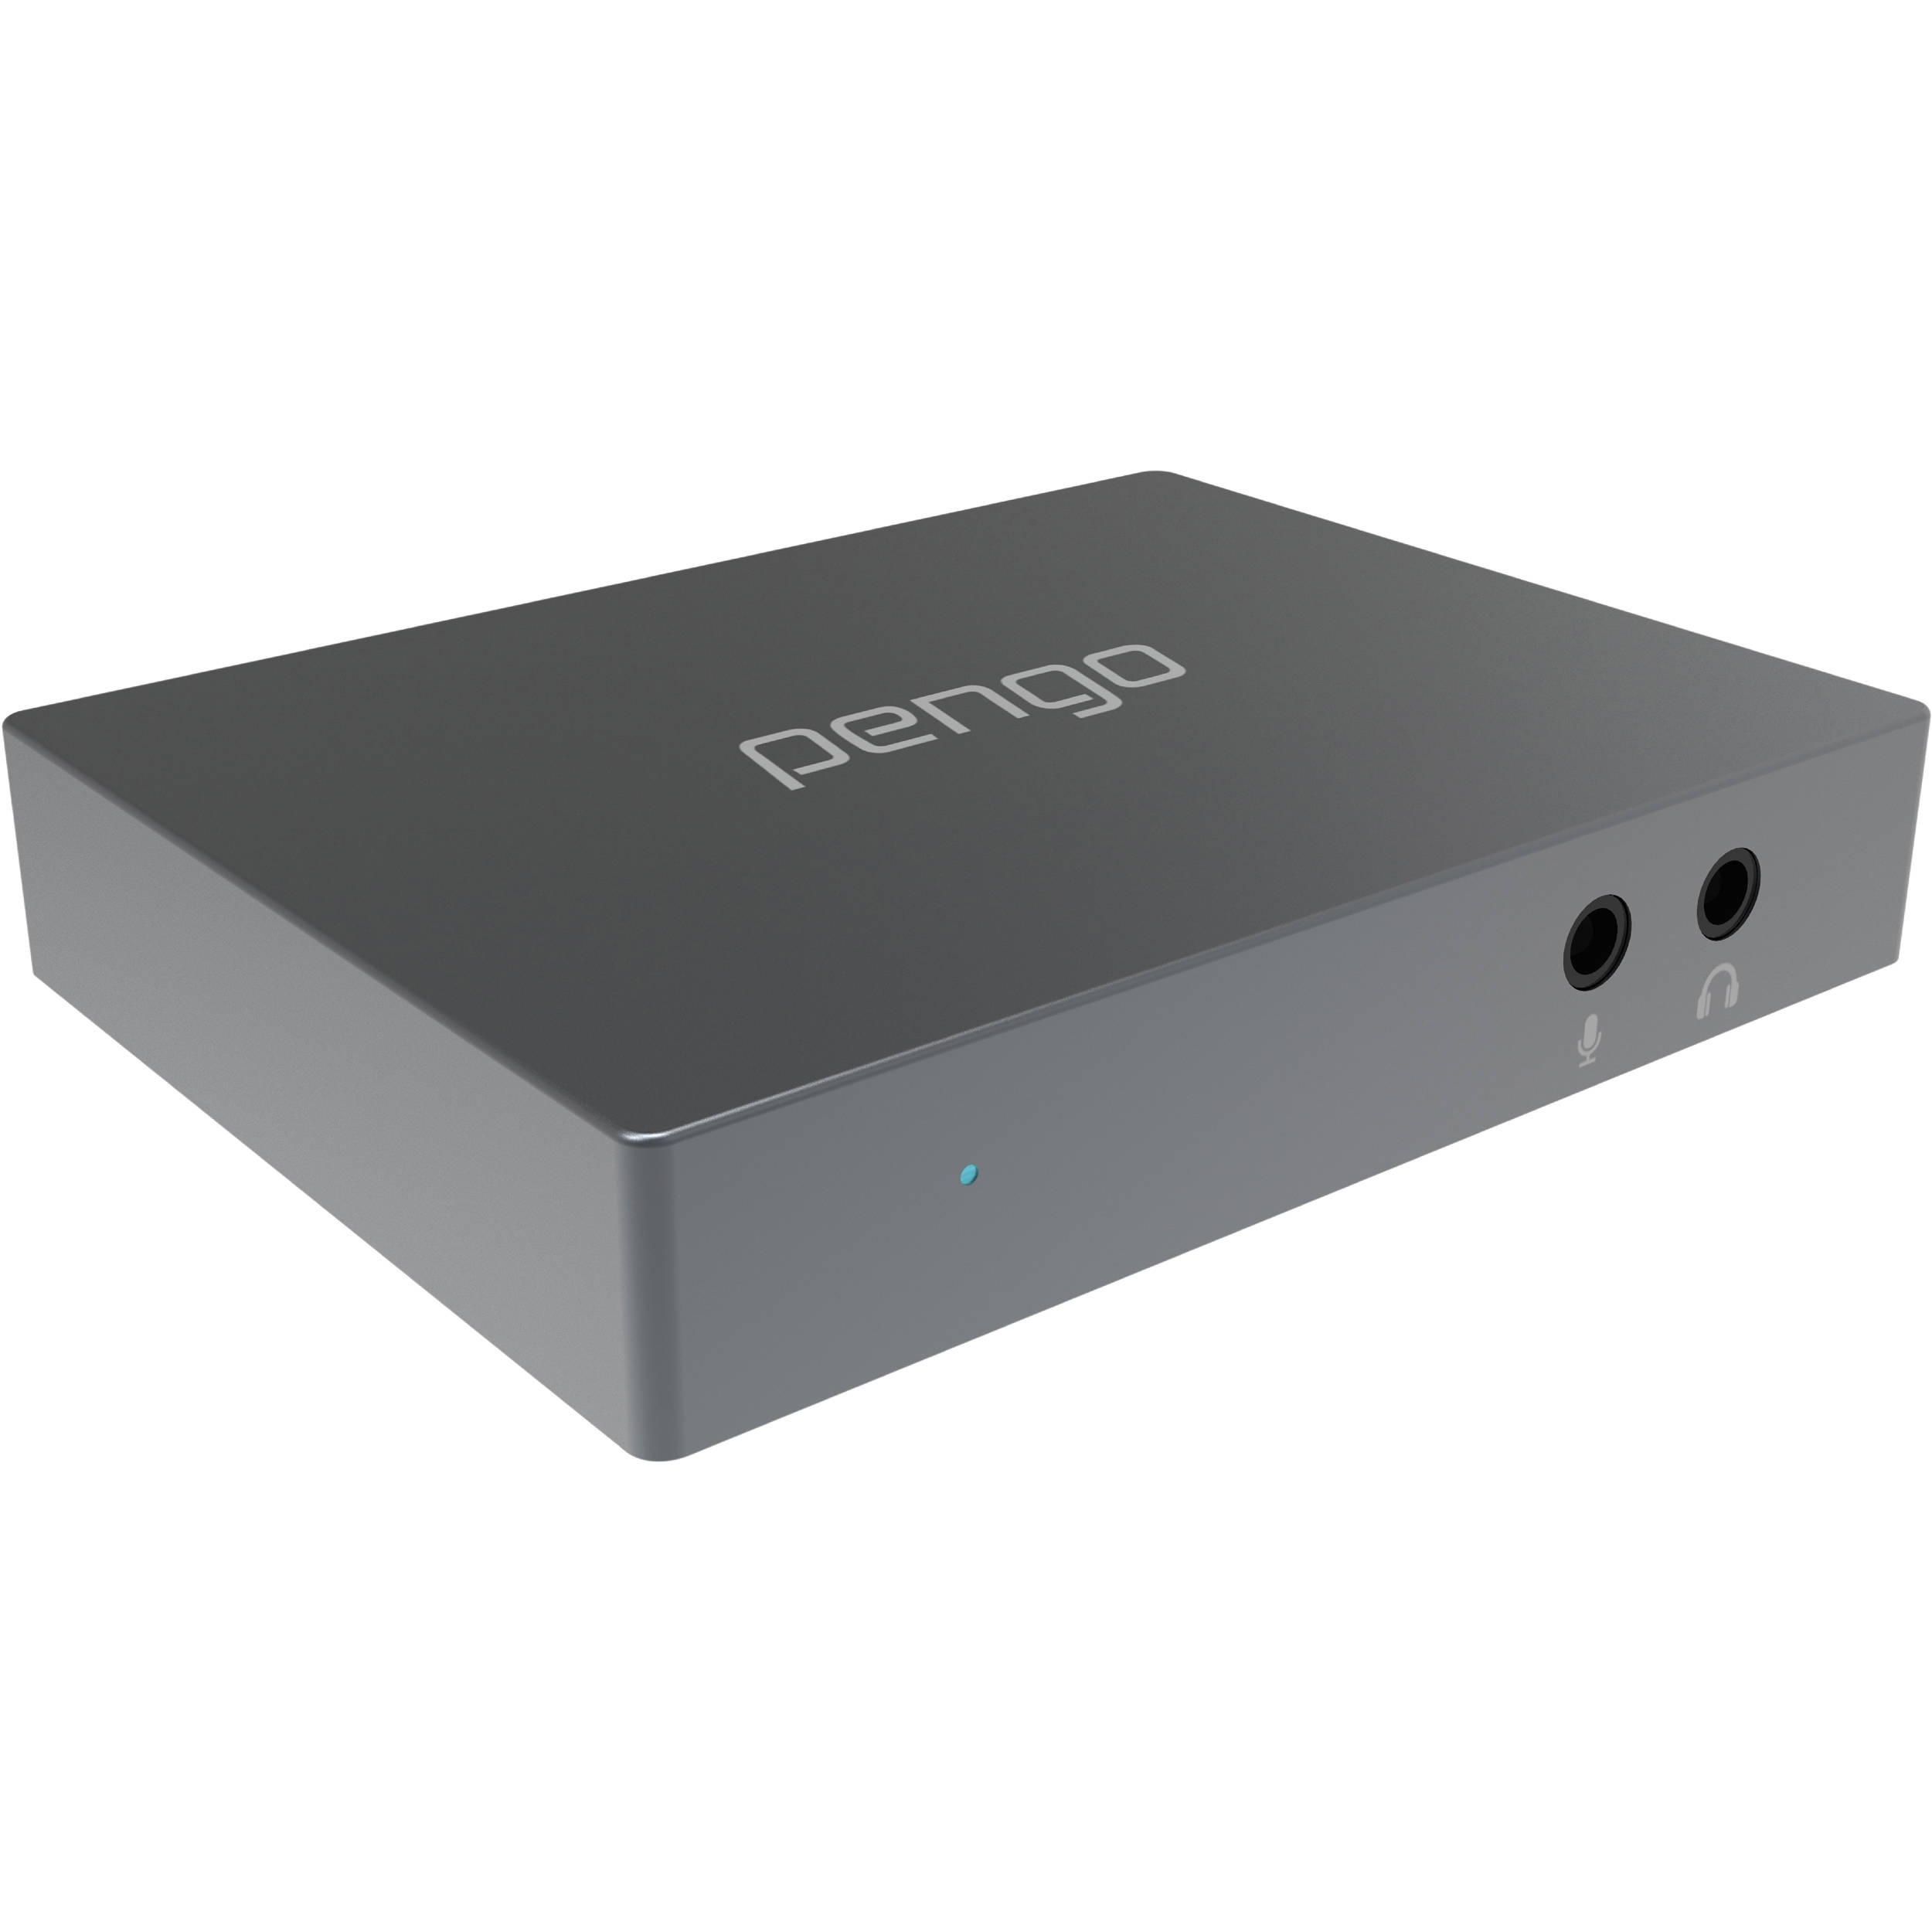 Pengo Technology 4K HDMI to USB 3.0 Video Grabber (Titanium Grey)